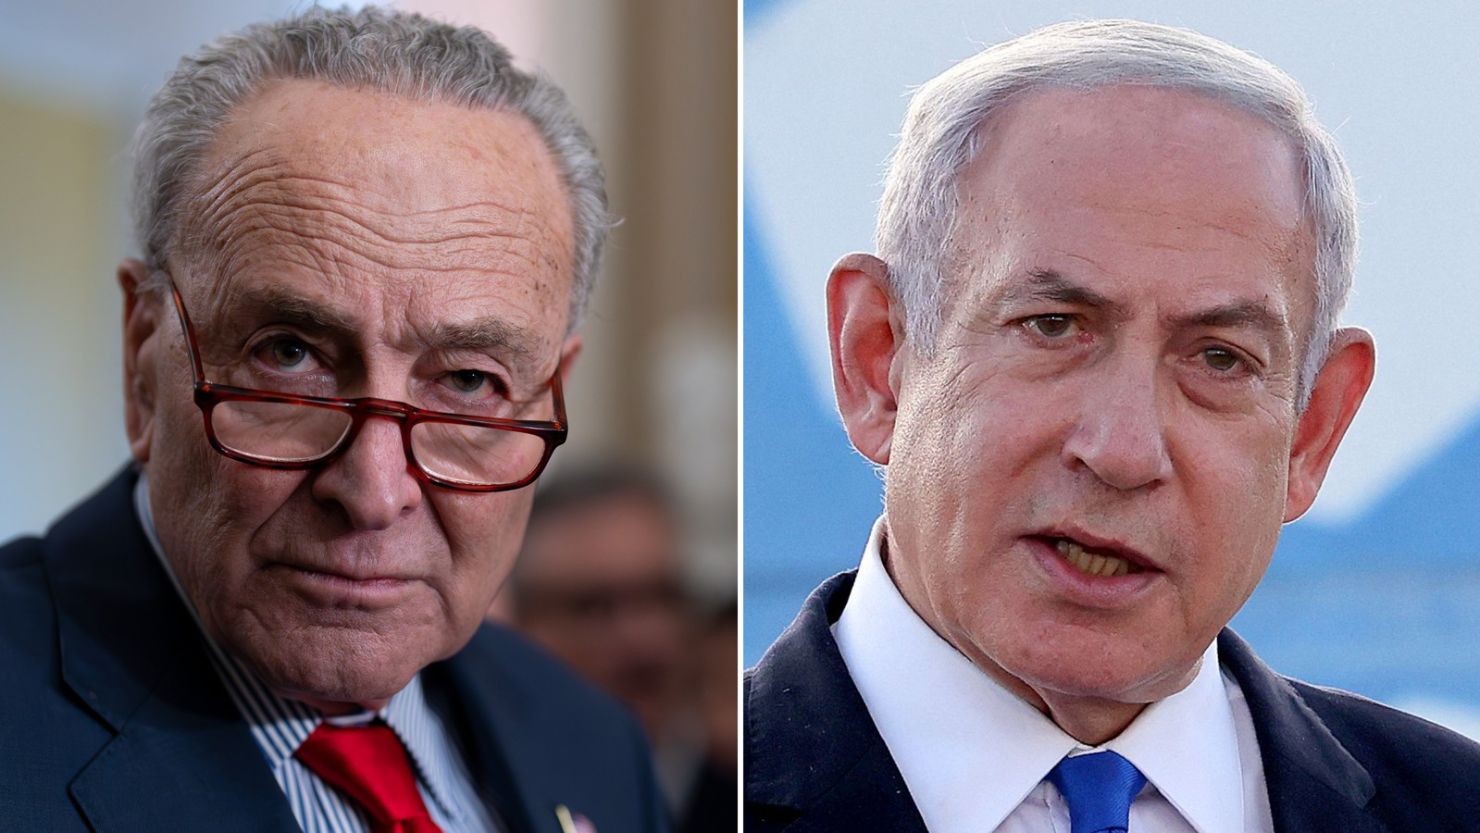 From left, Senate Majority Leader Chuck Schumer and Israeli Prime Minister Benjamin Netanyahu.